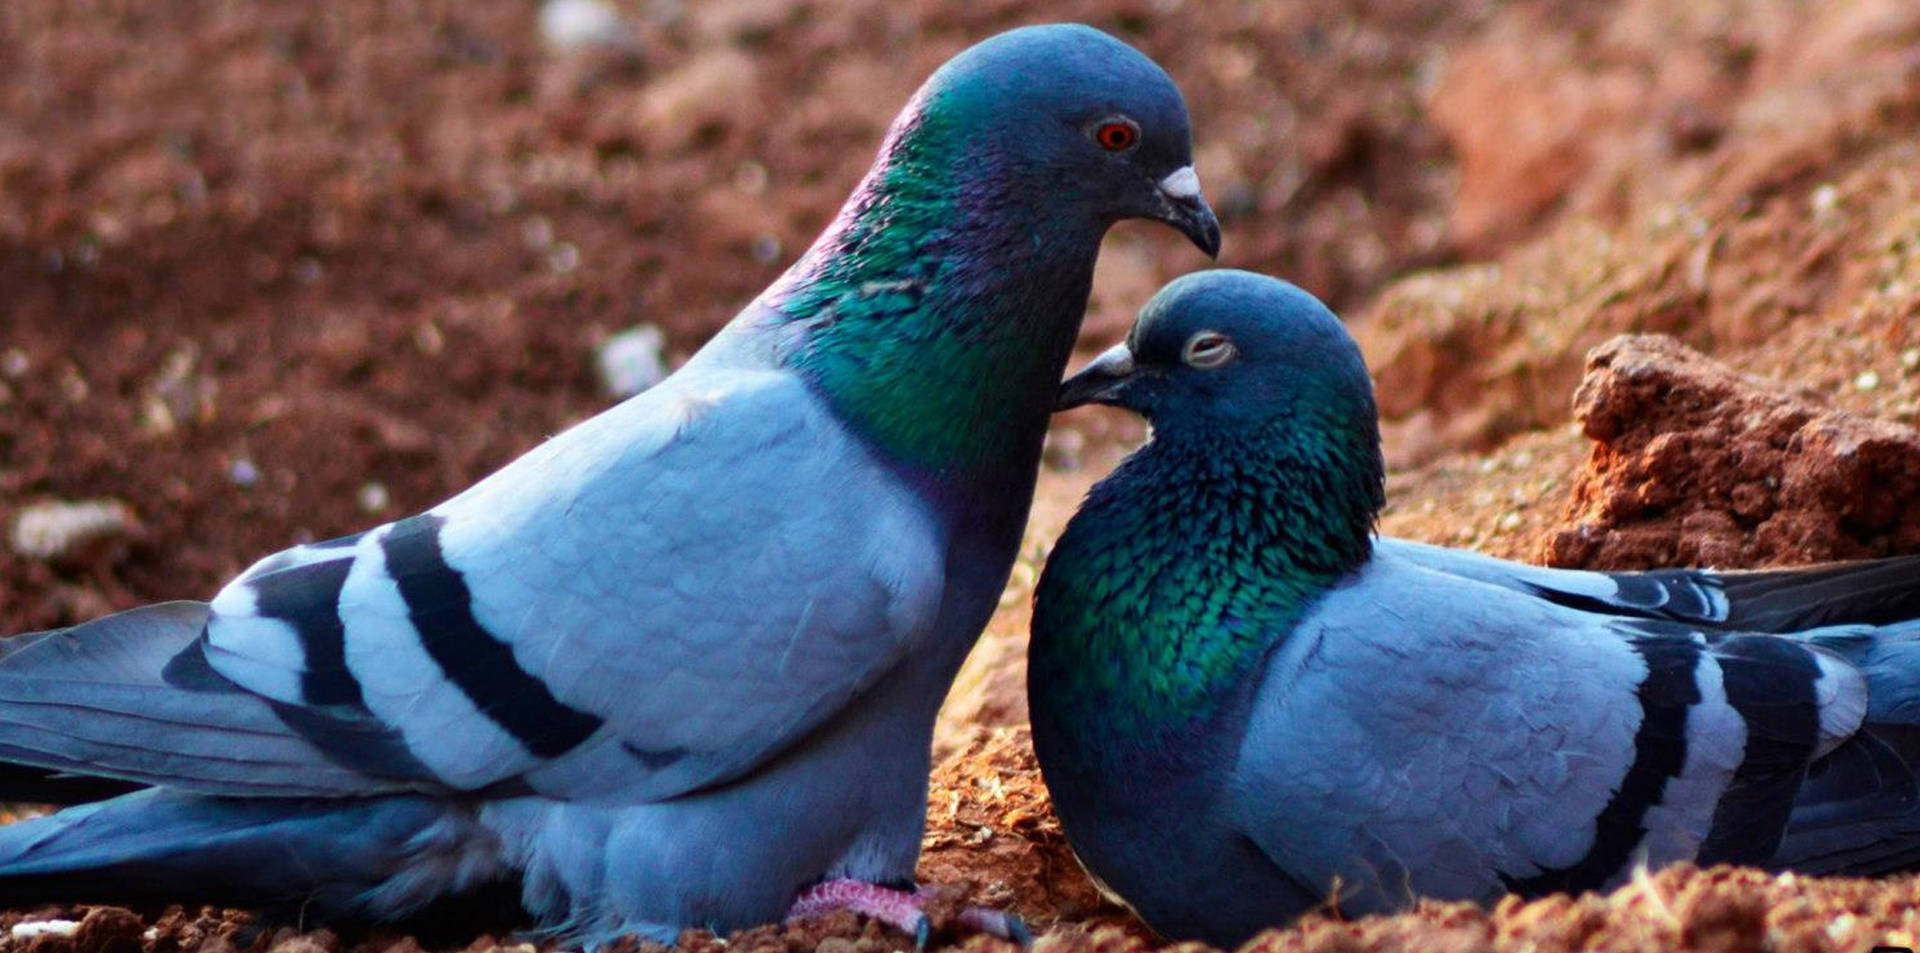 Pigeon Love Birds In Soil